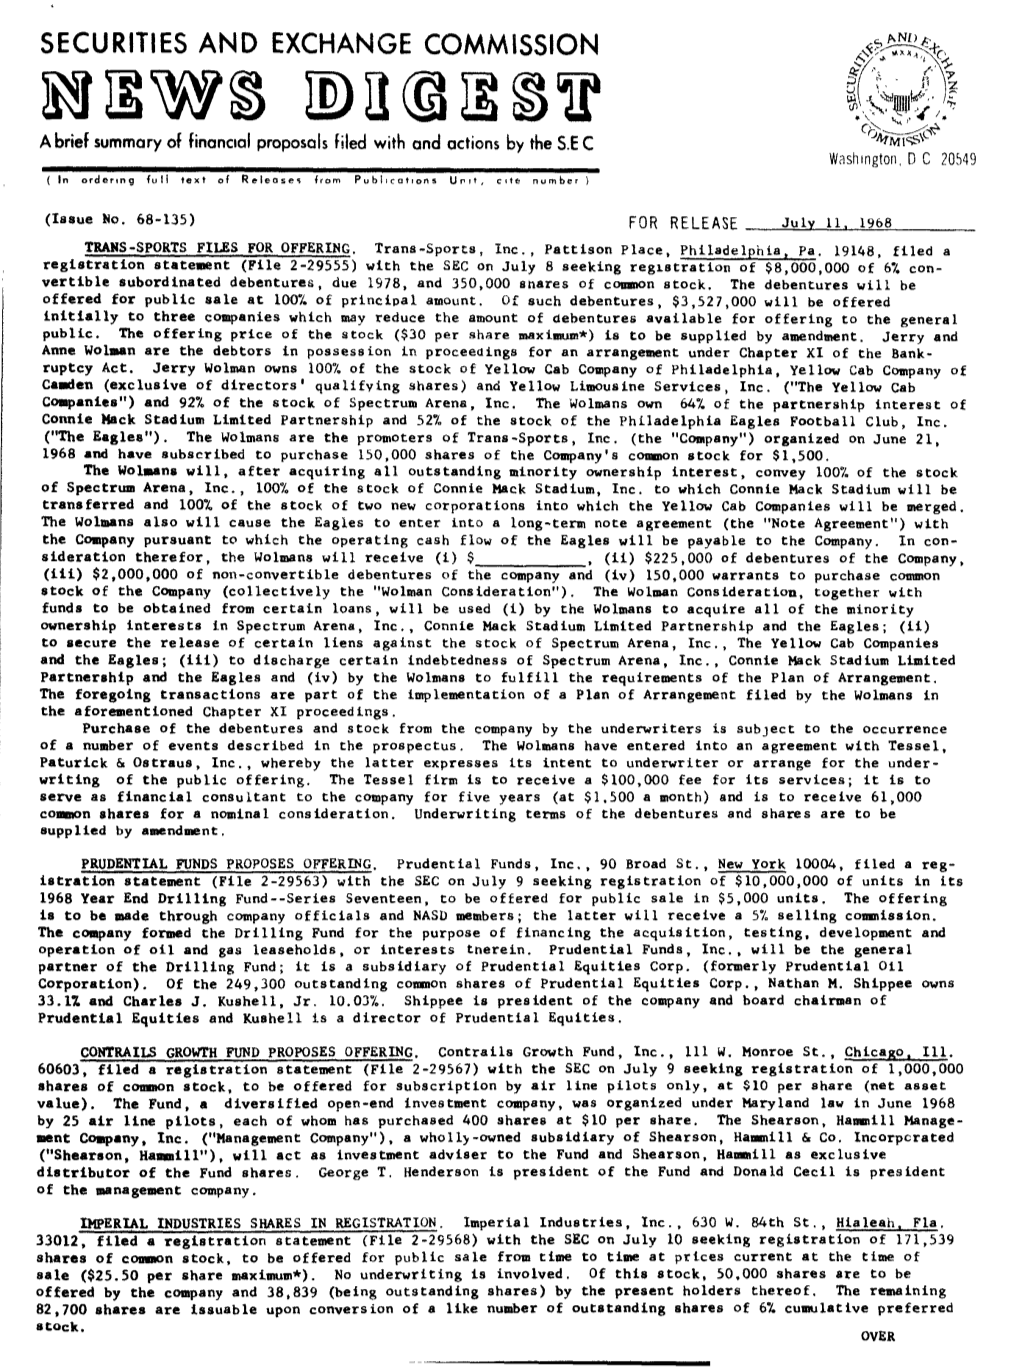 SEC News Digest, 07-11-1968